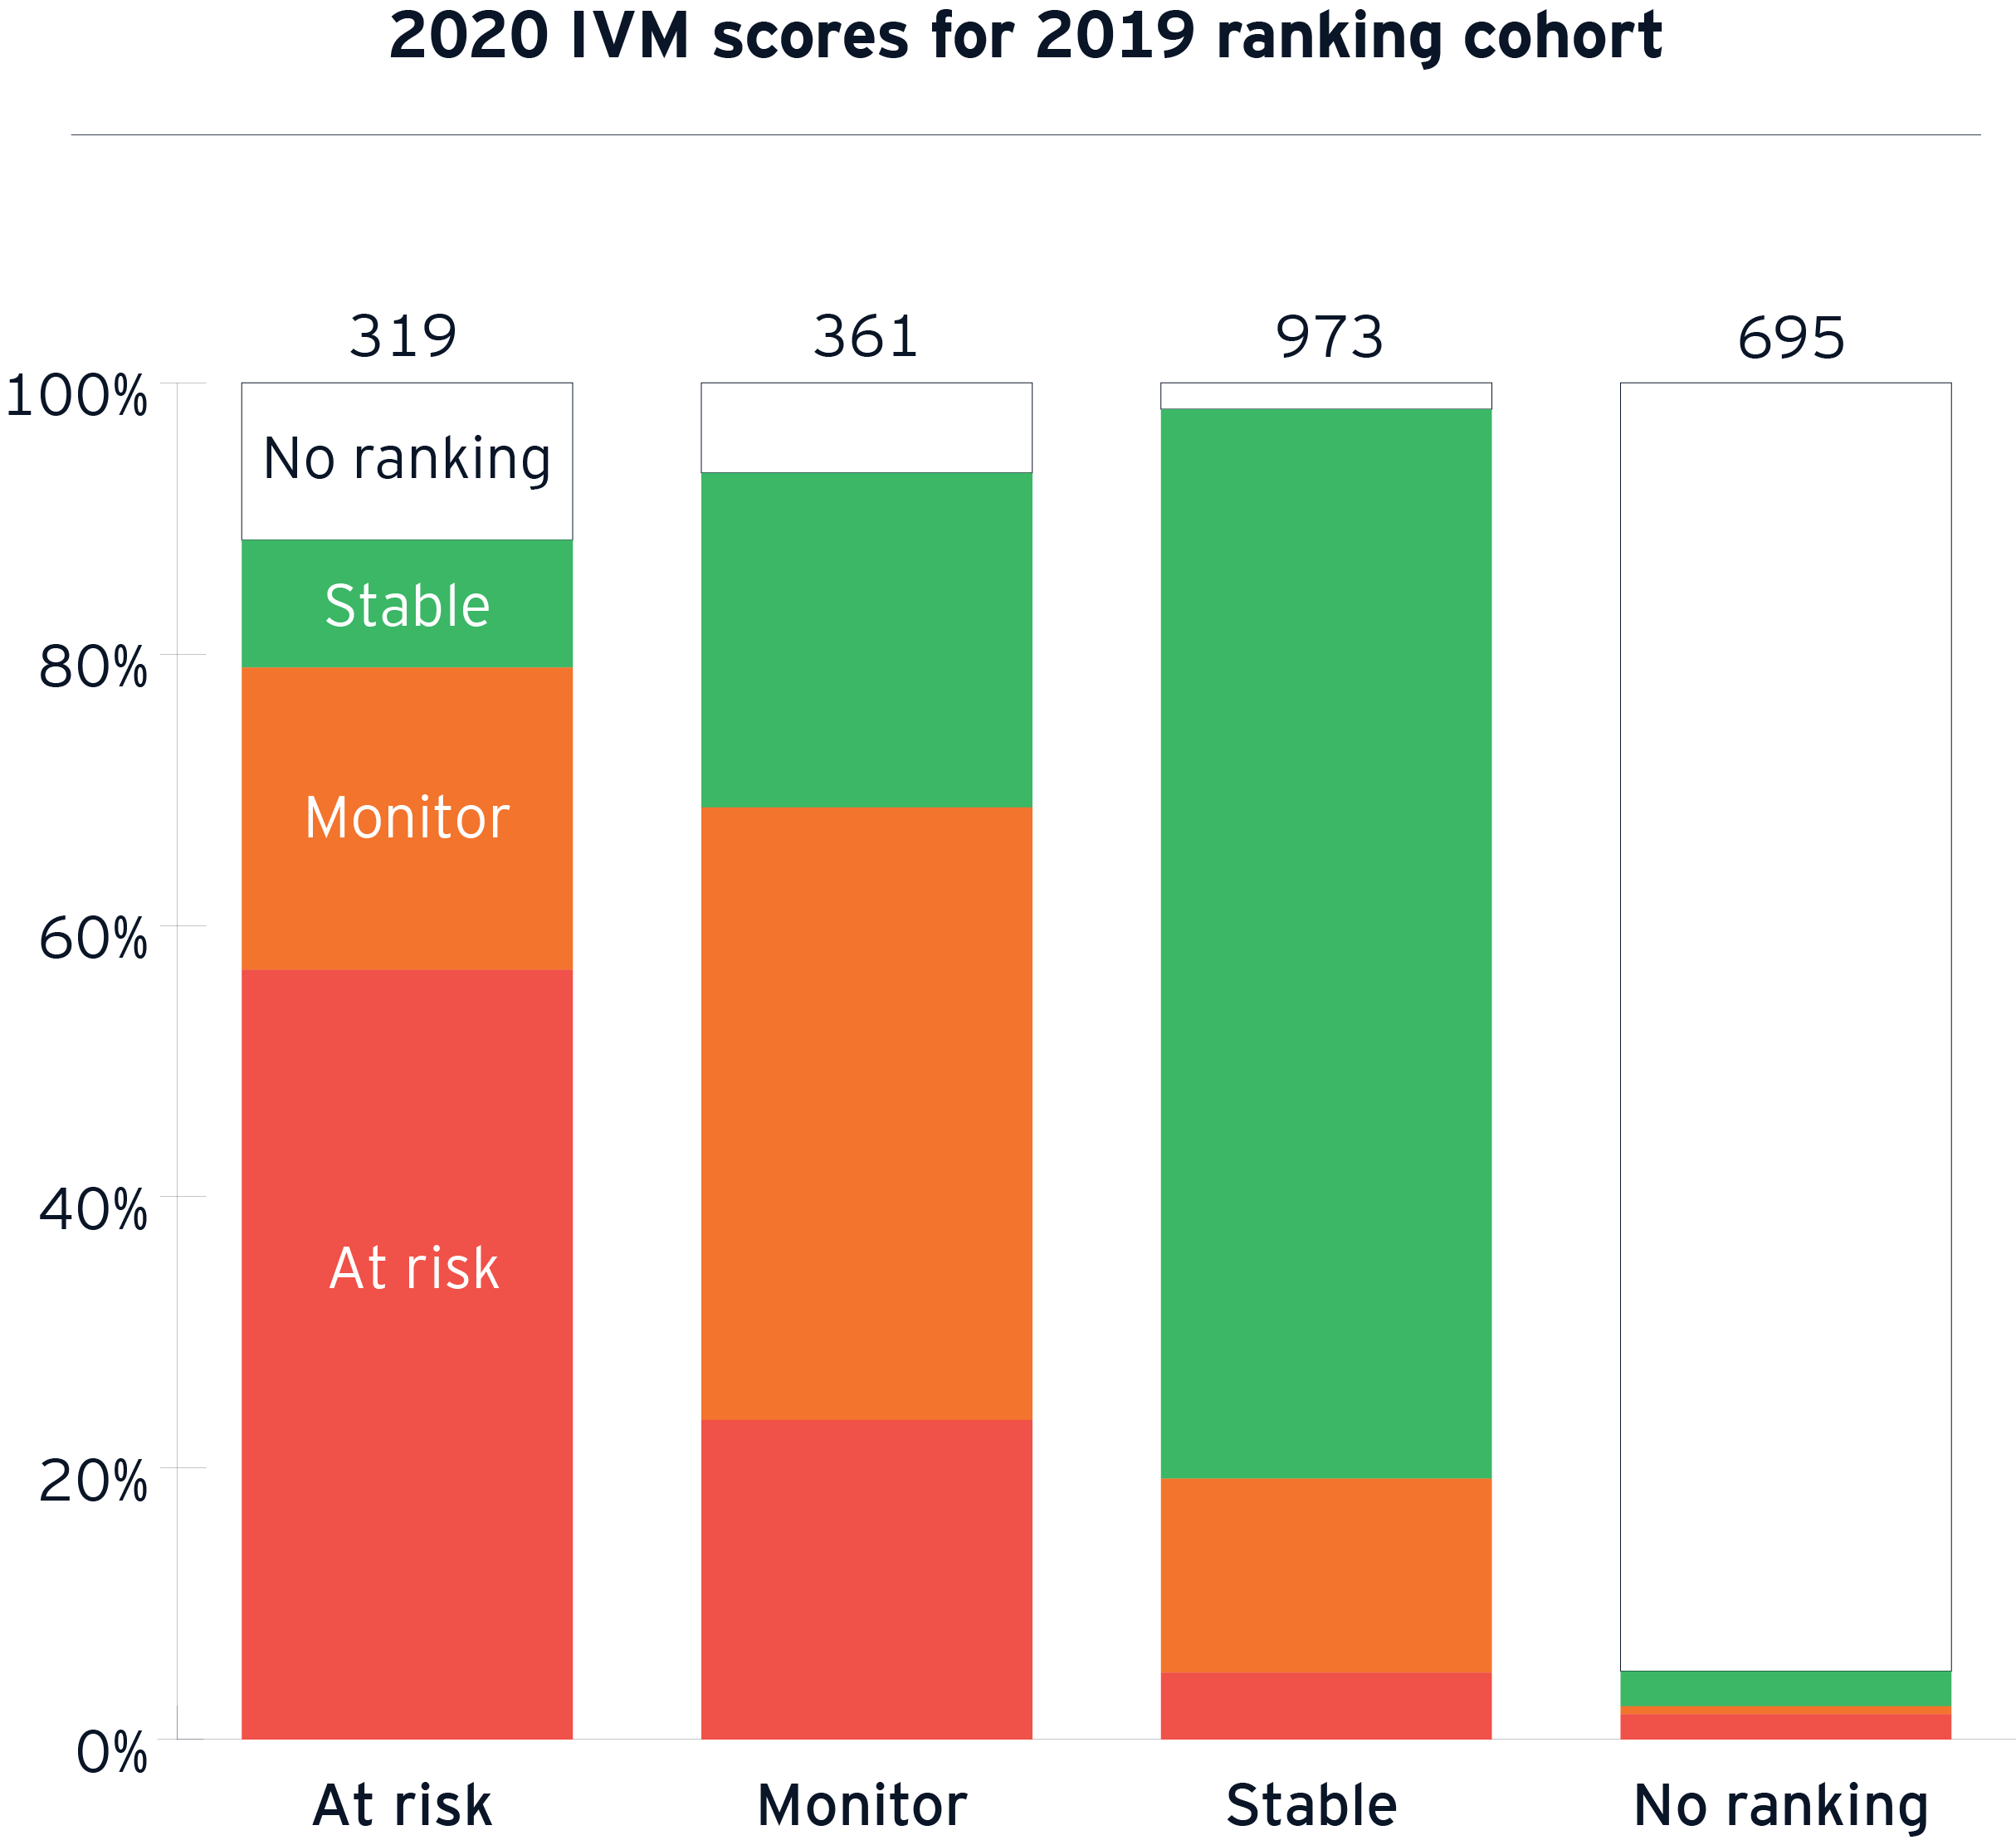 2020 ivm scores for 2019 ranking cohort1